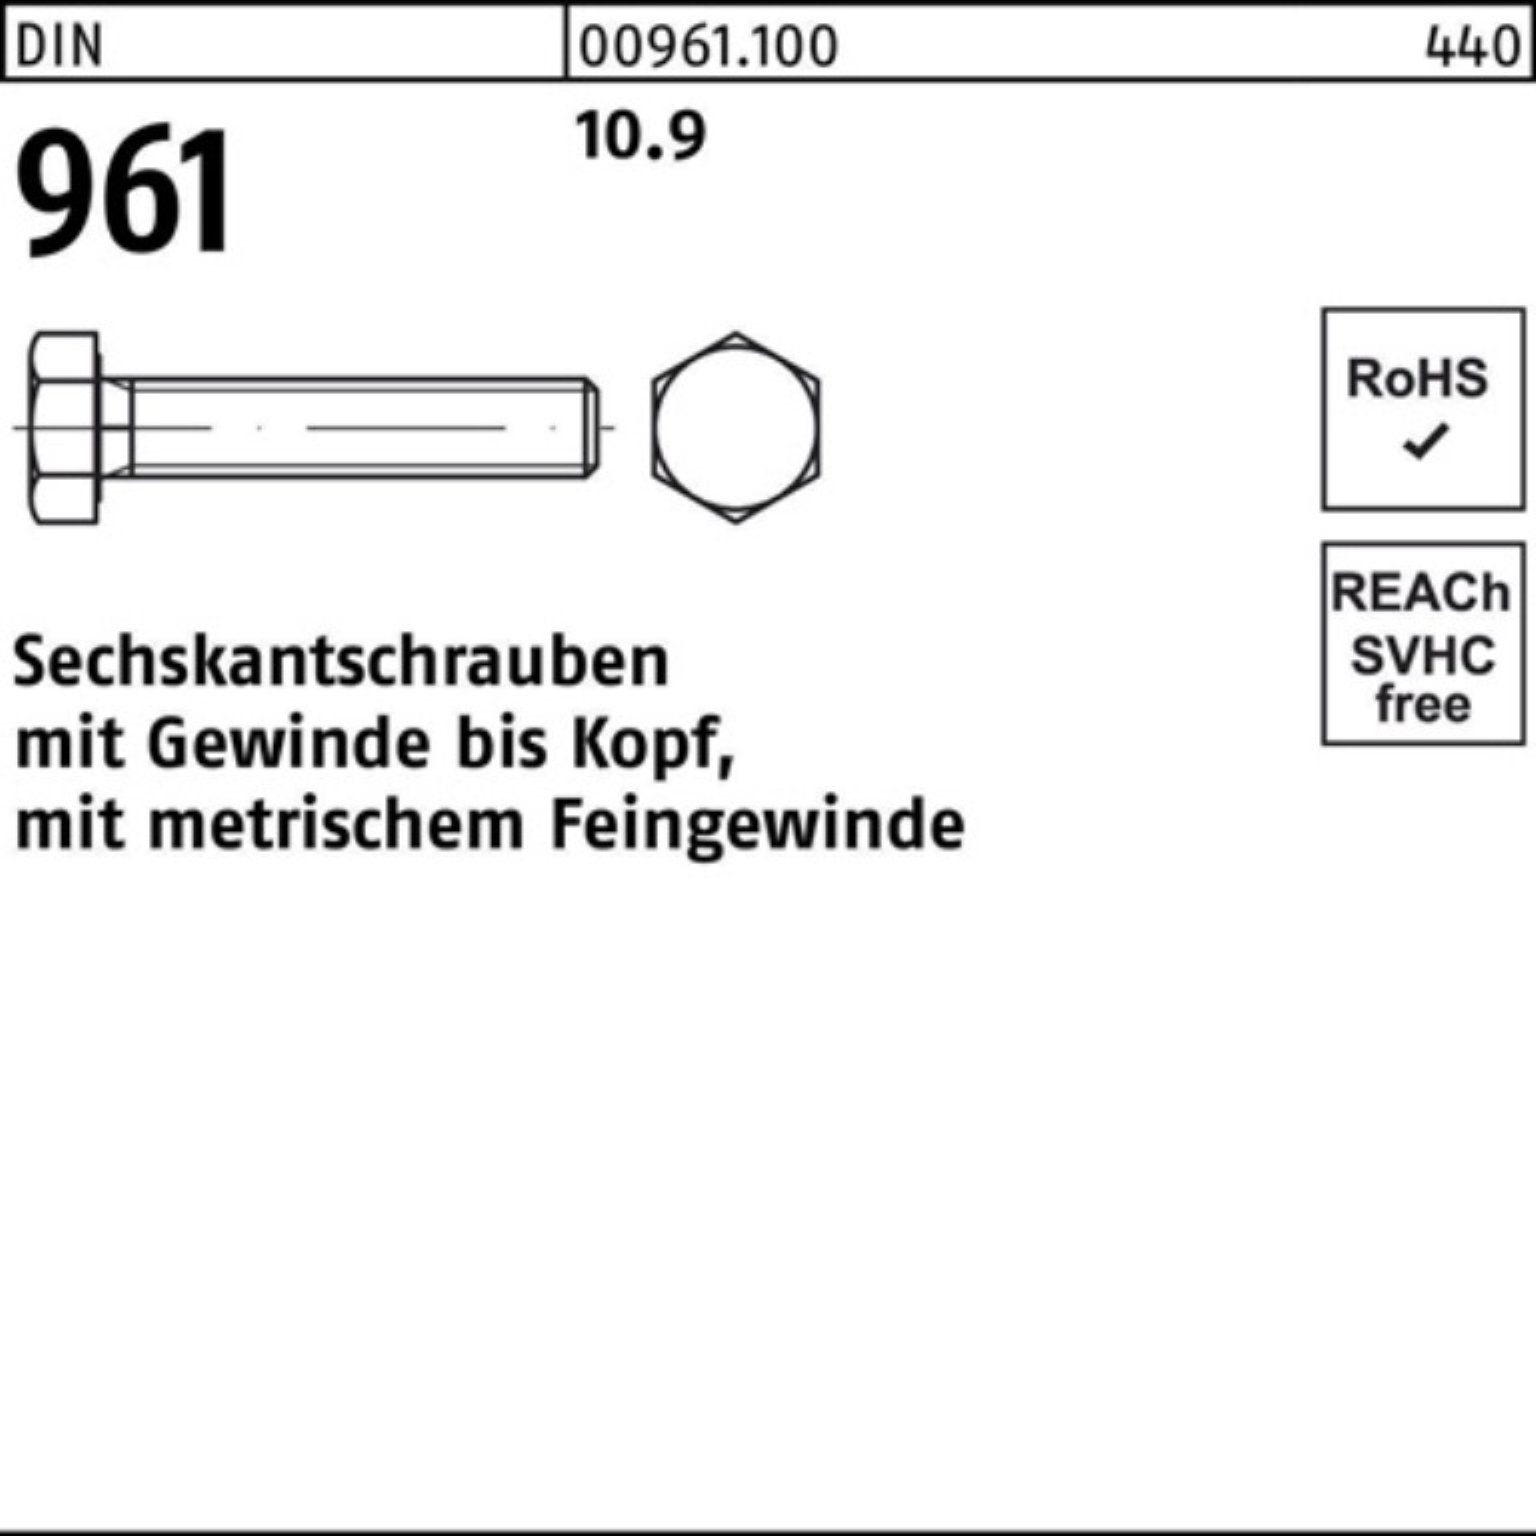 führend Reyher Sechskantschraube 100er Pack Stück DIN Sechskantschraube DI 961 45 M12x1,5x 10.9 VG 100